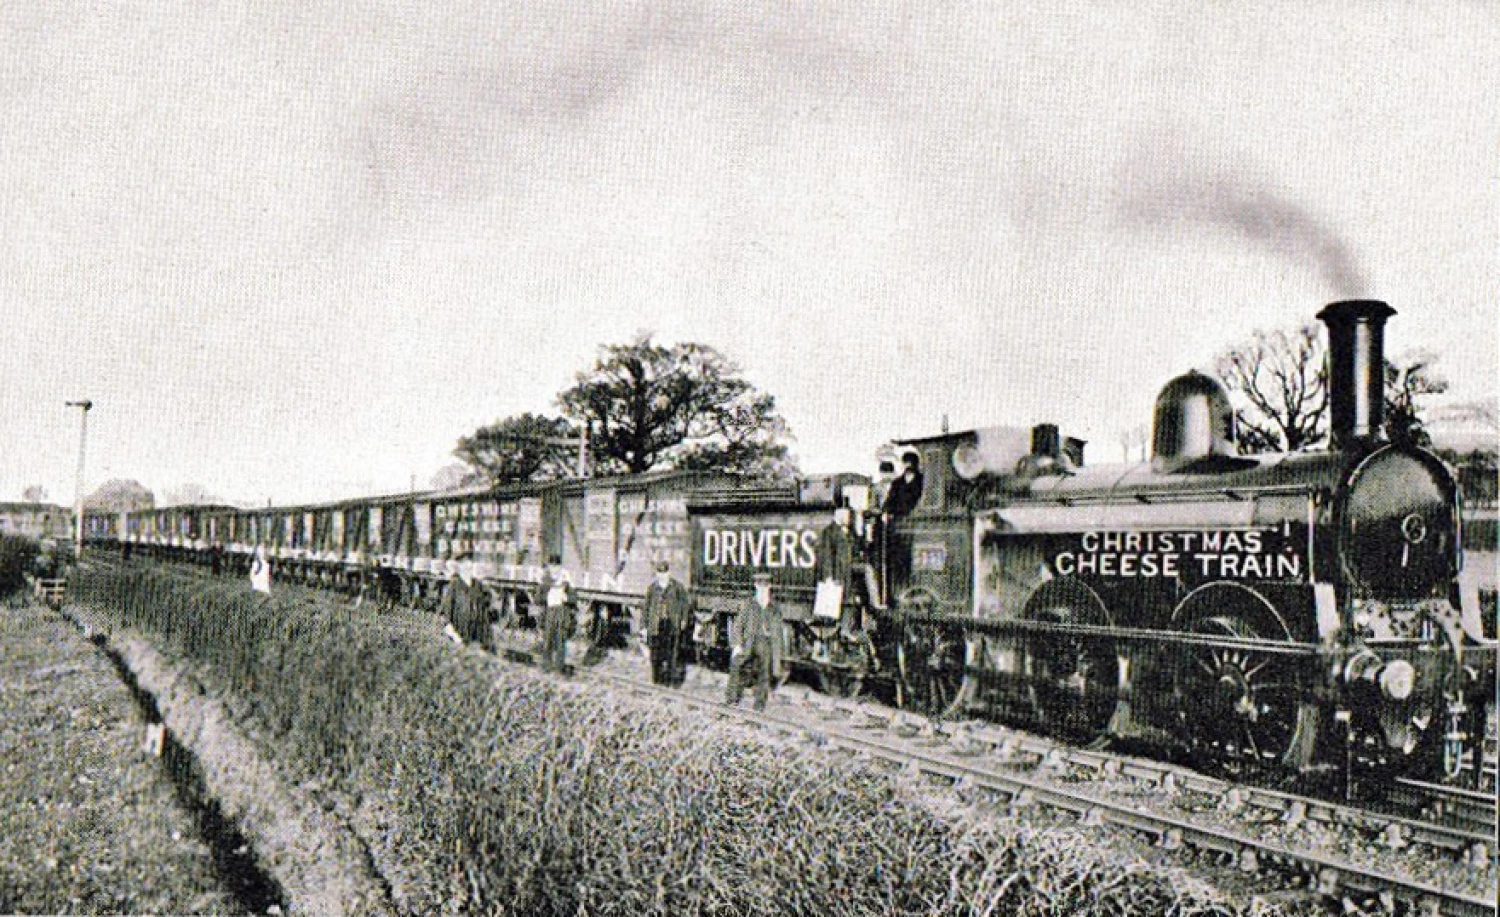 image 1907 cheese train ed